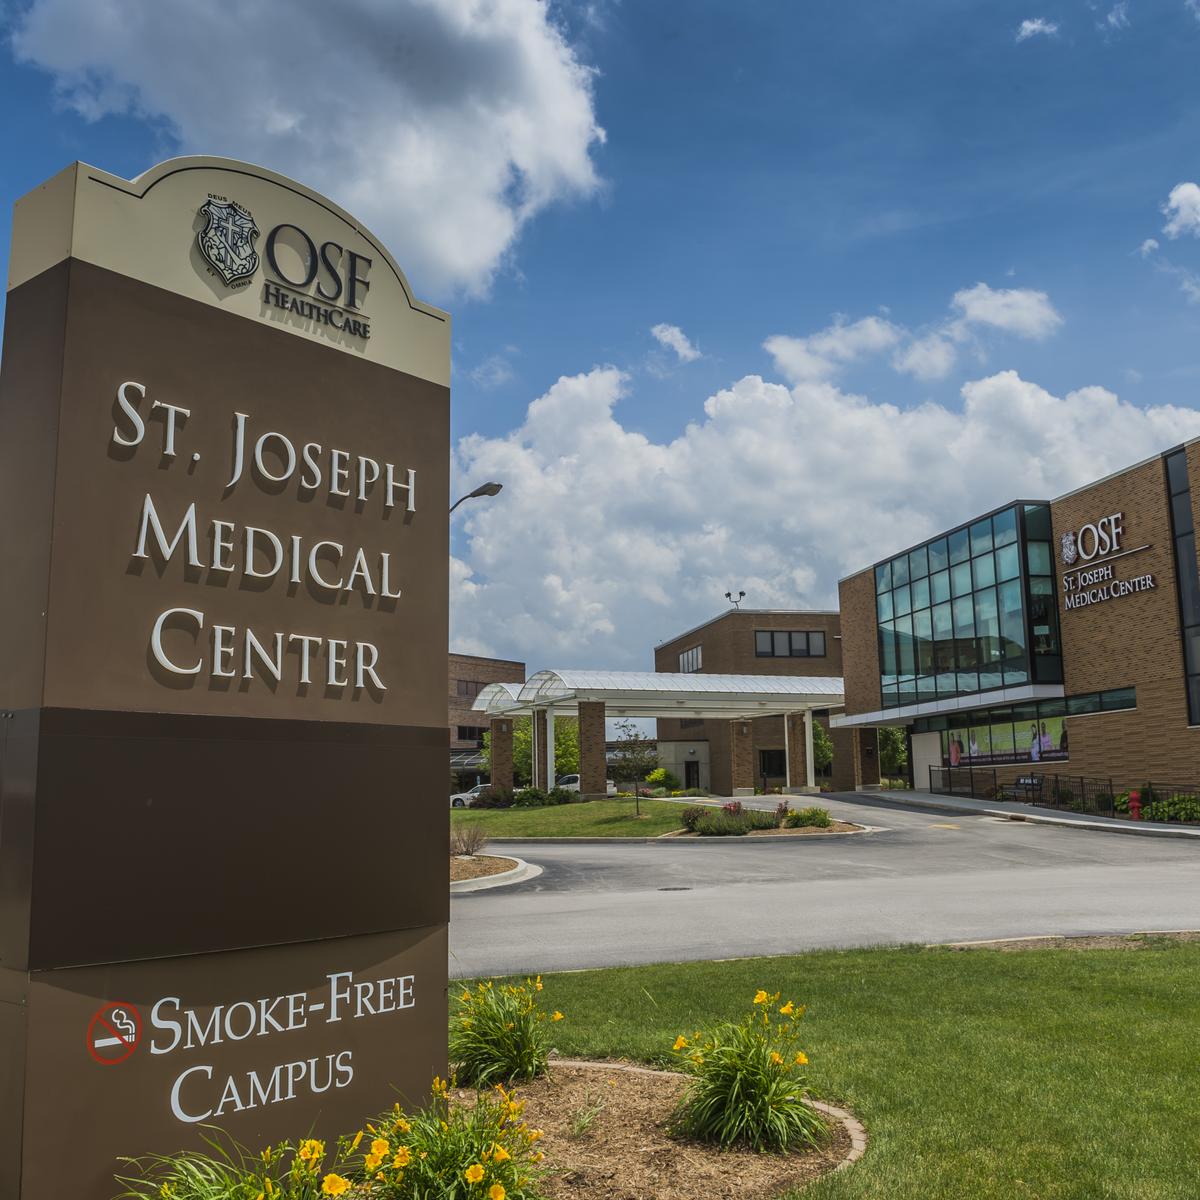 OSF St. Joseph Medical Center, 2200 E. Washington Street, Bloomington, Illinois, 61701